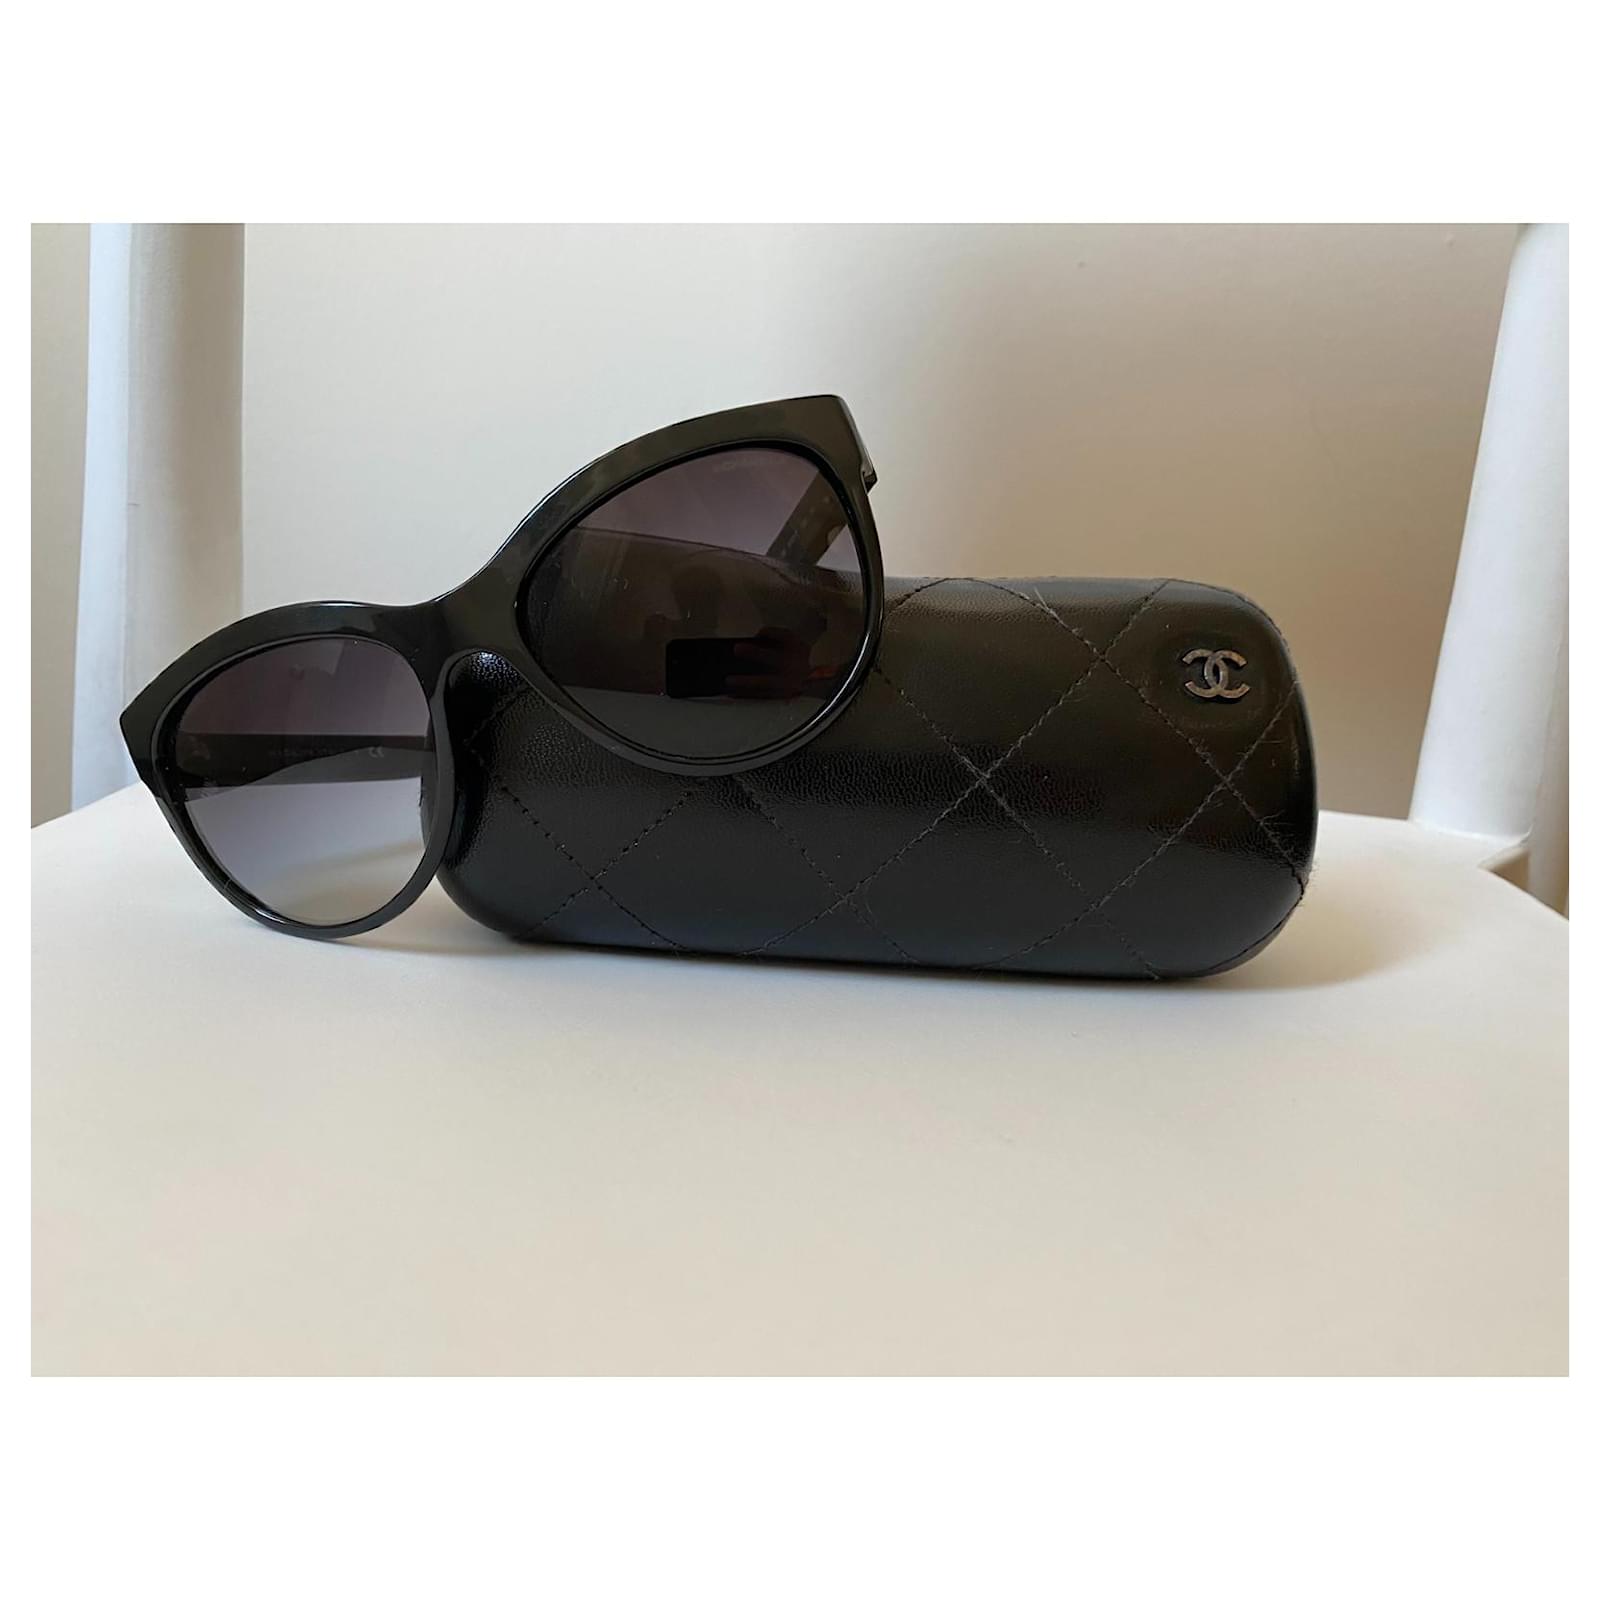 CHANEL Black Acetate Frame Cultured Pearl Cat-Eye Sunglasses.